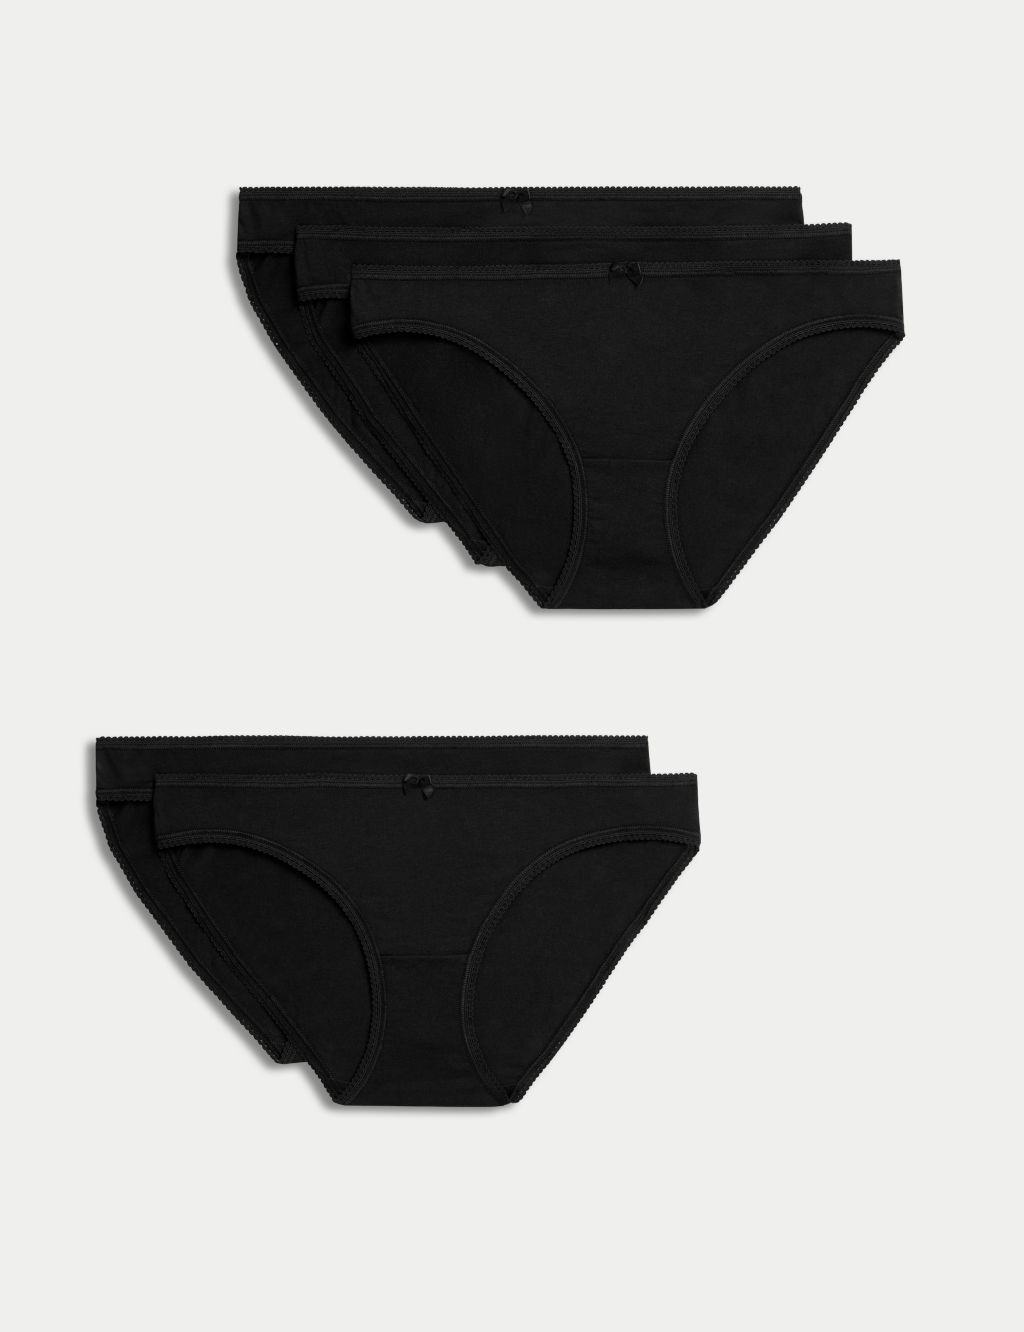 Nightmare Black - Sports Underwear Top - ShopperBoard